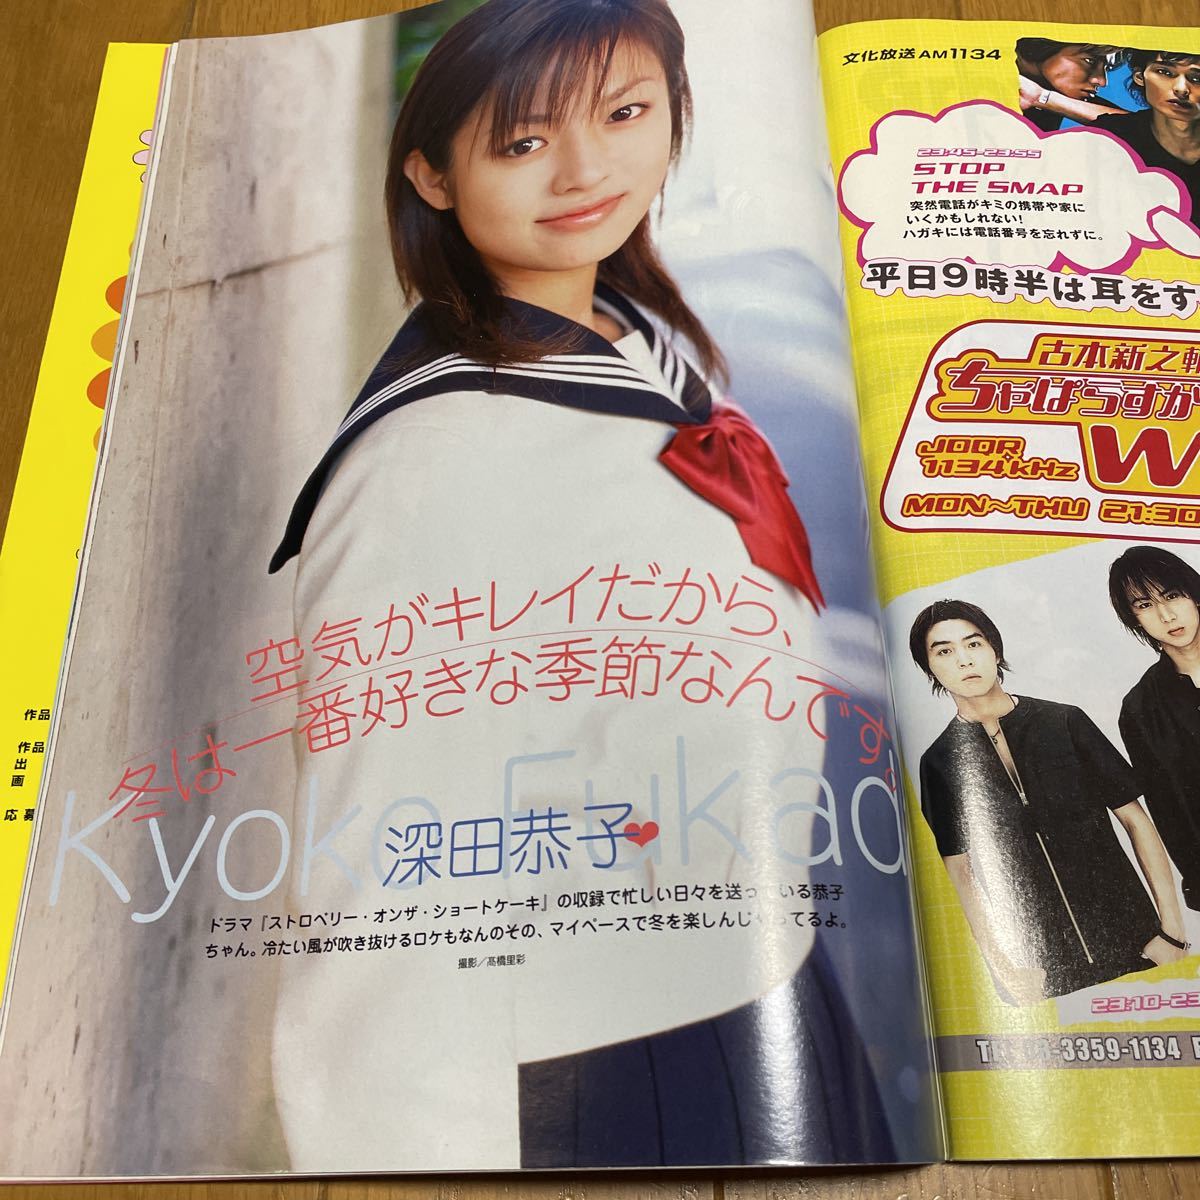  super телевизор & идол журнал Manishmanishu2001 год 3 месяц номер Takizawa Hideaki гроза KinKi Kids Johnny's Jr. Fukada Kyouko др. 